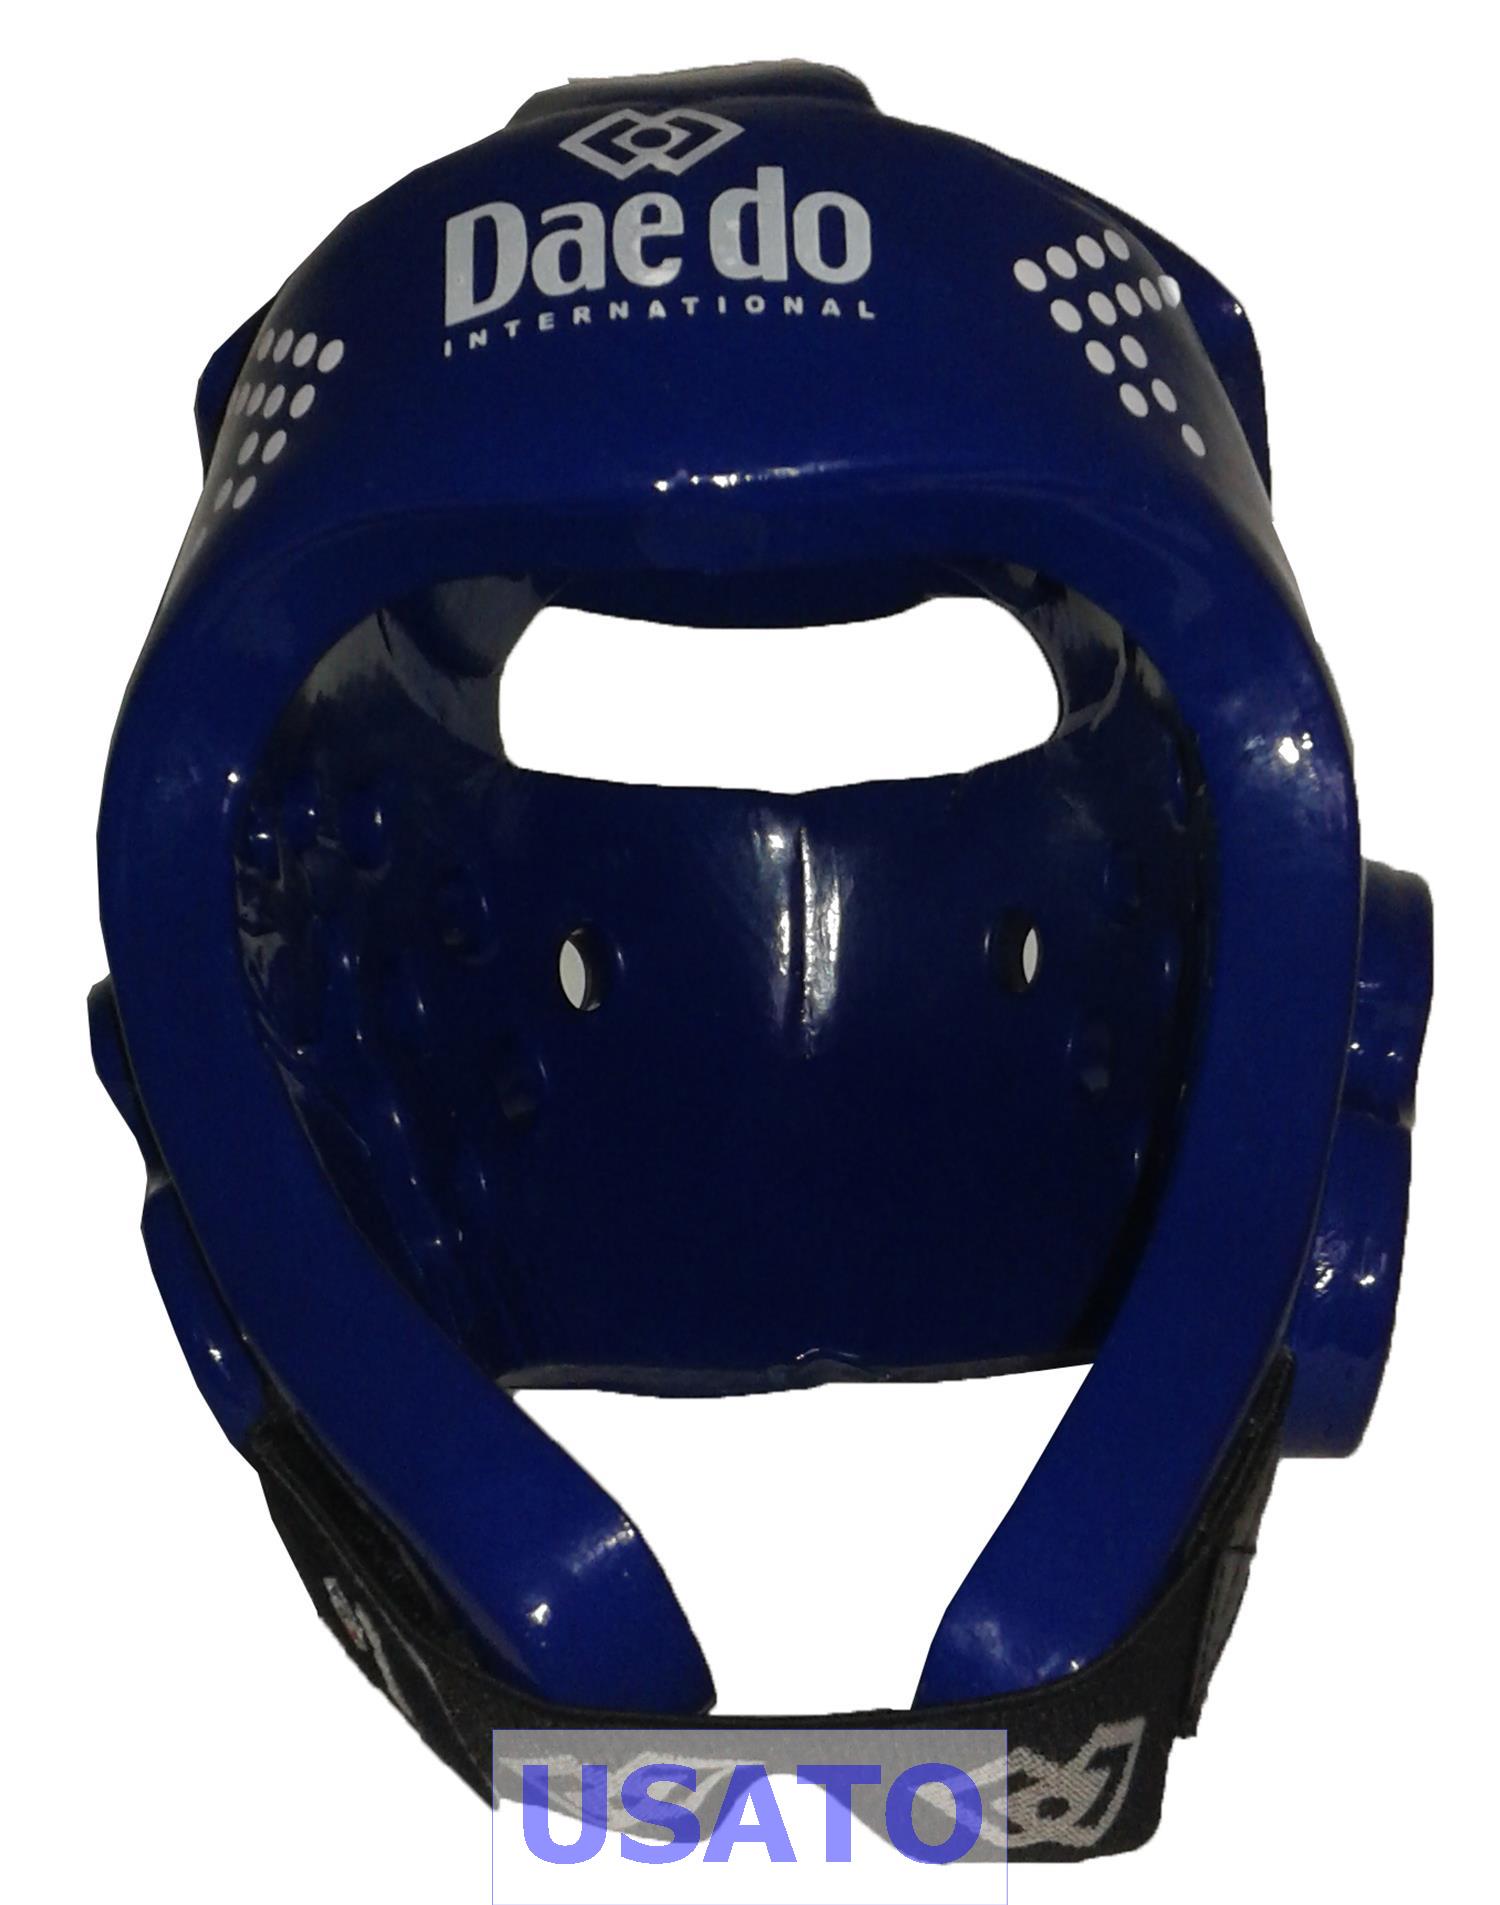 Dae Do Casco Elettronico Dae do usato Funzionante 100% Blu (M - BLU NAVY)